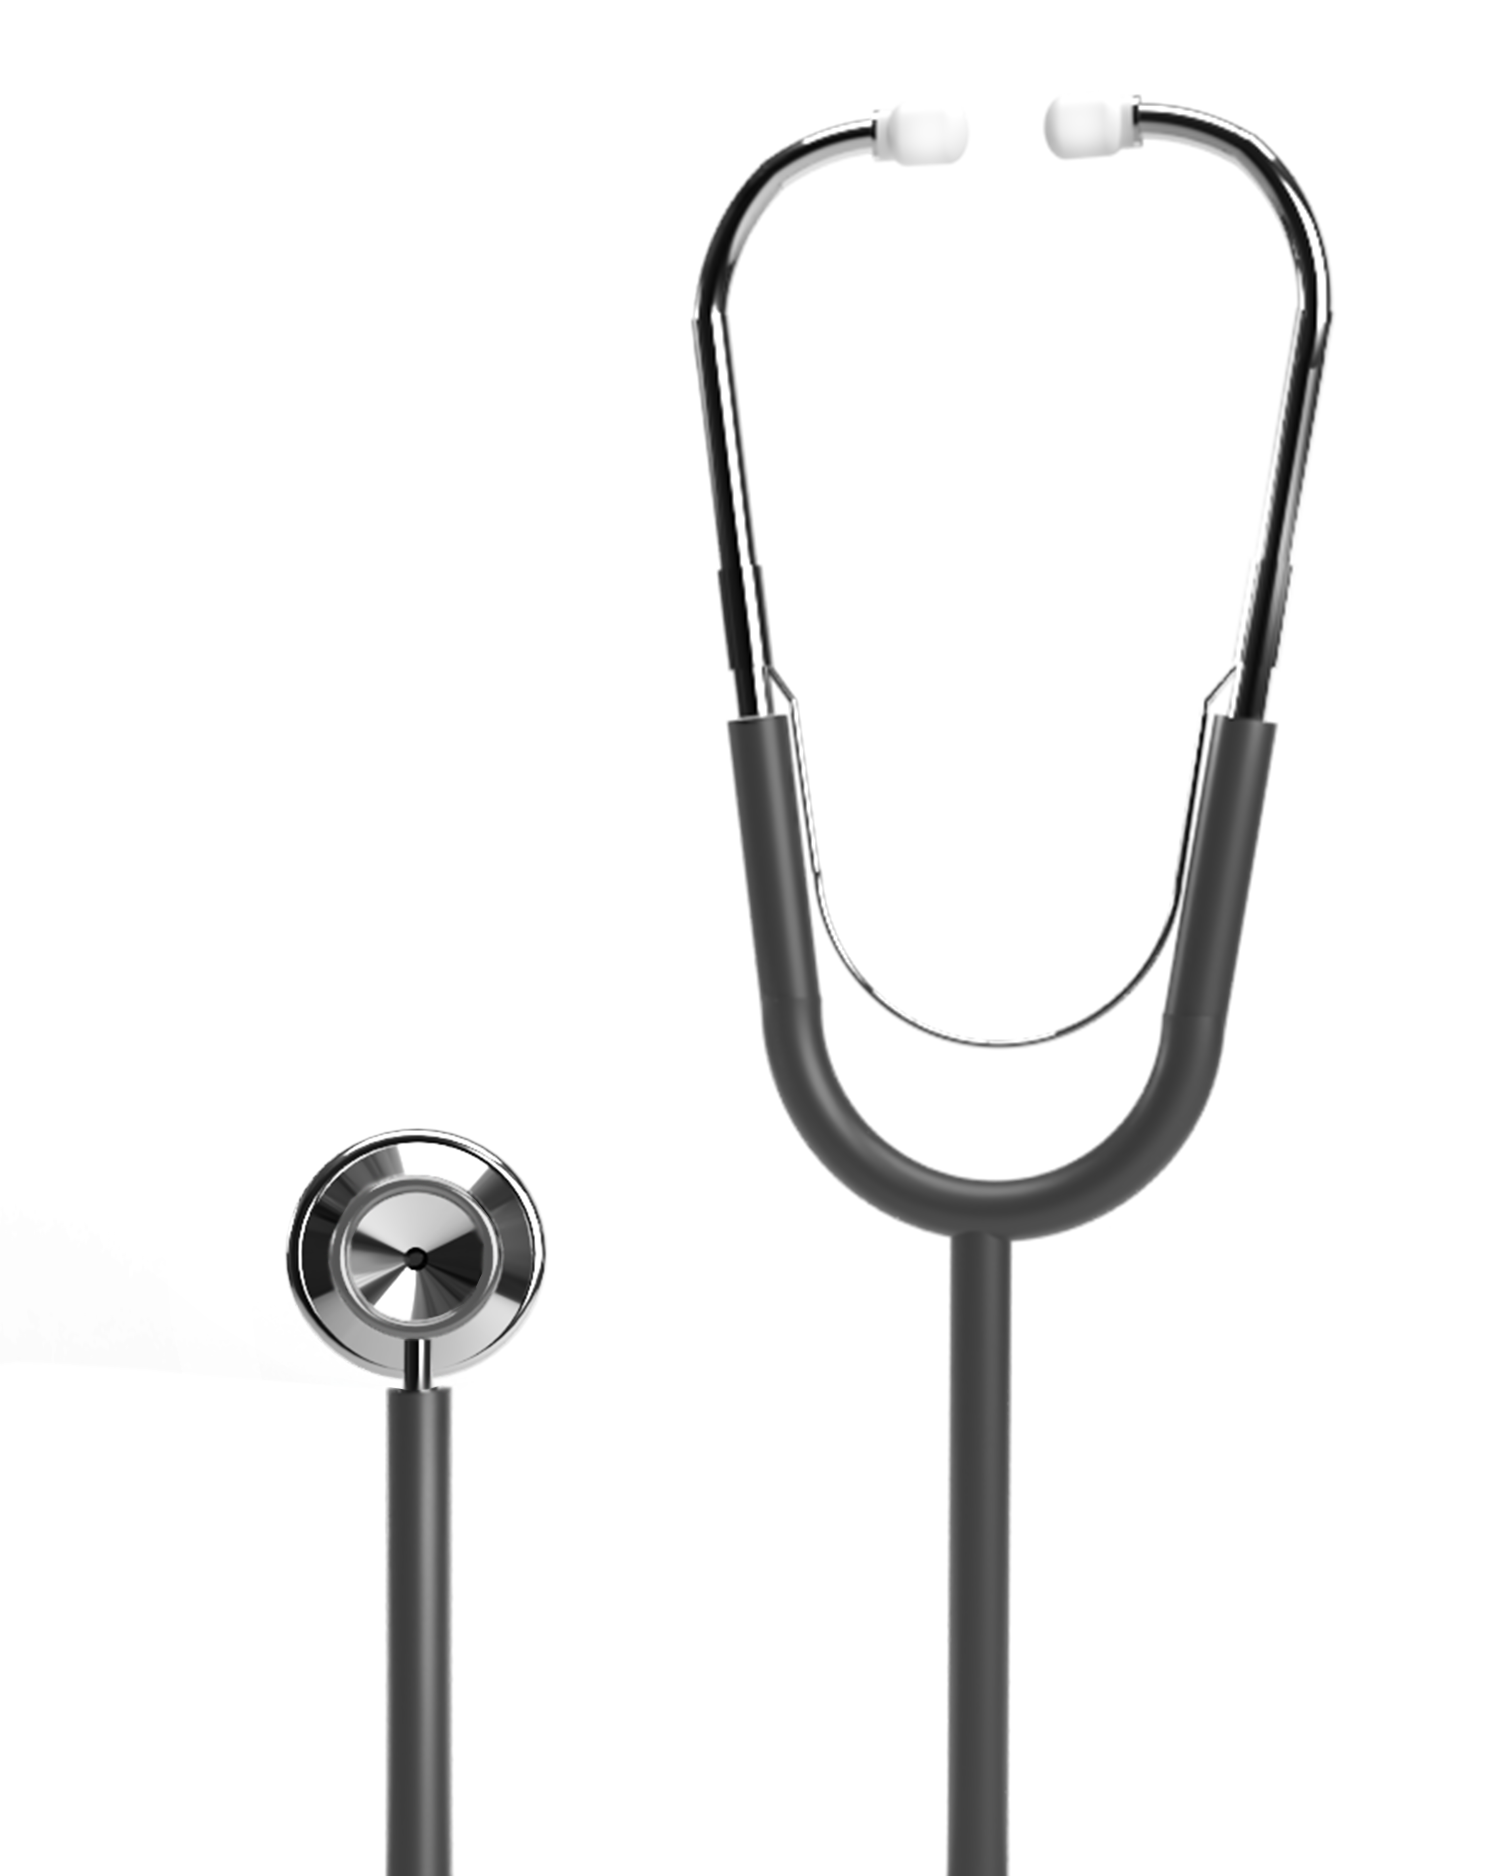 BV Medical Professional Series Pediatric Dual-Head Stethoscope Gray